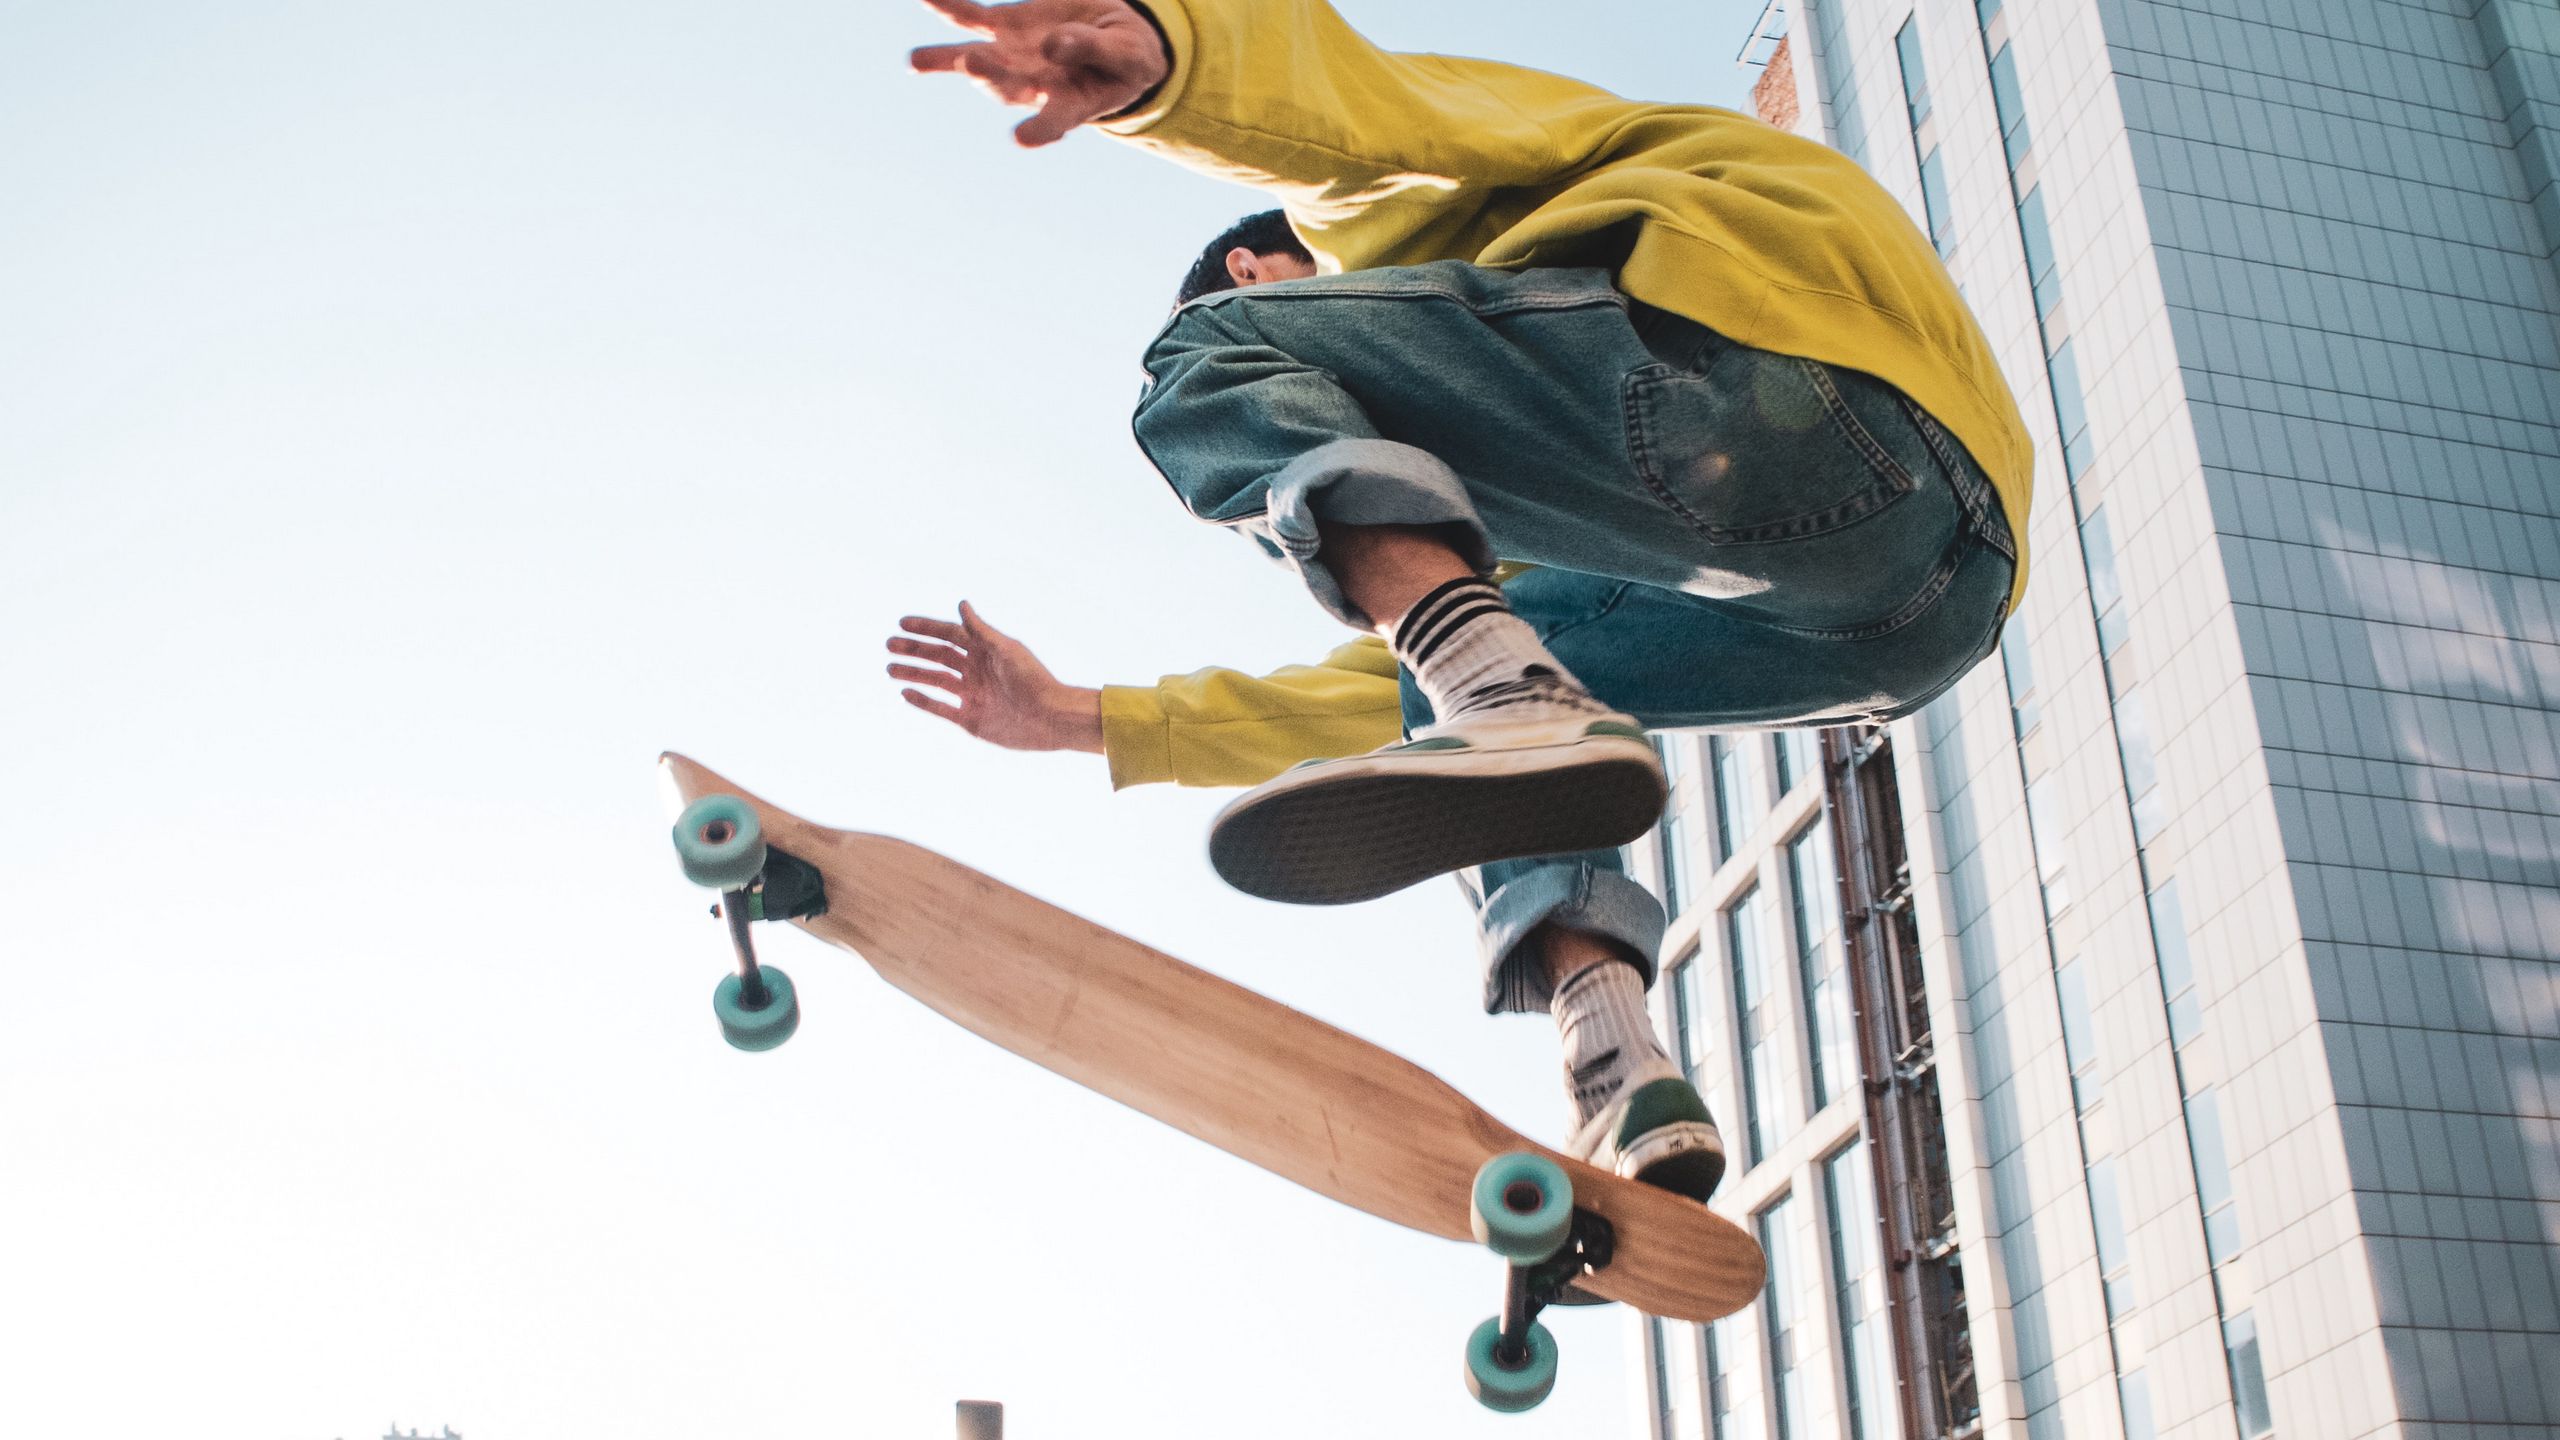 Download wallpaper 2560x1440 skateboarder, skate, jump, trick, city ...